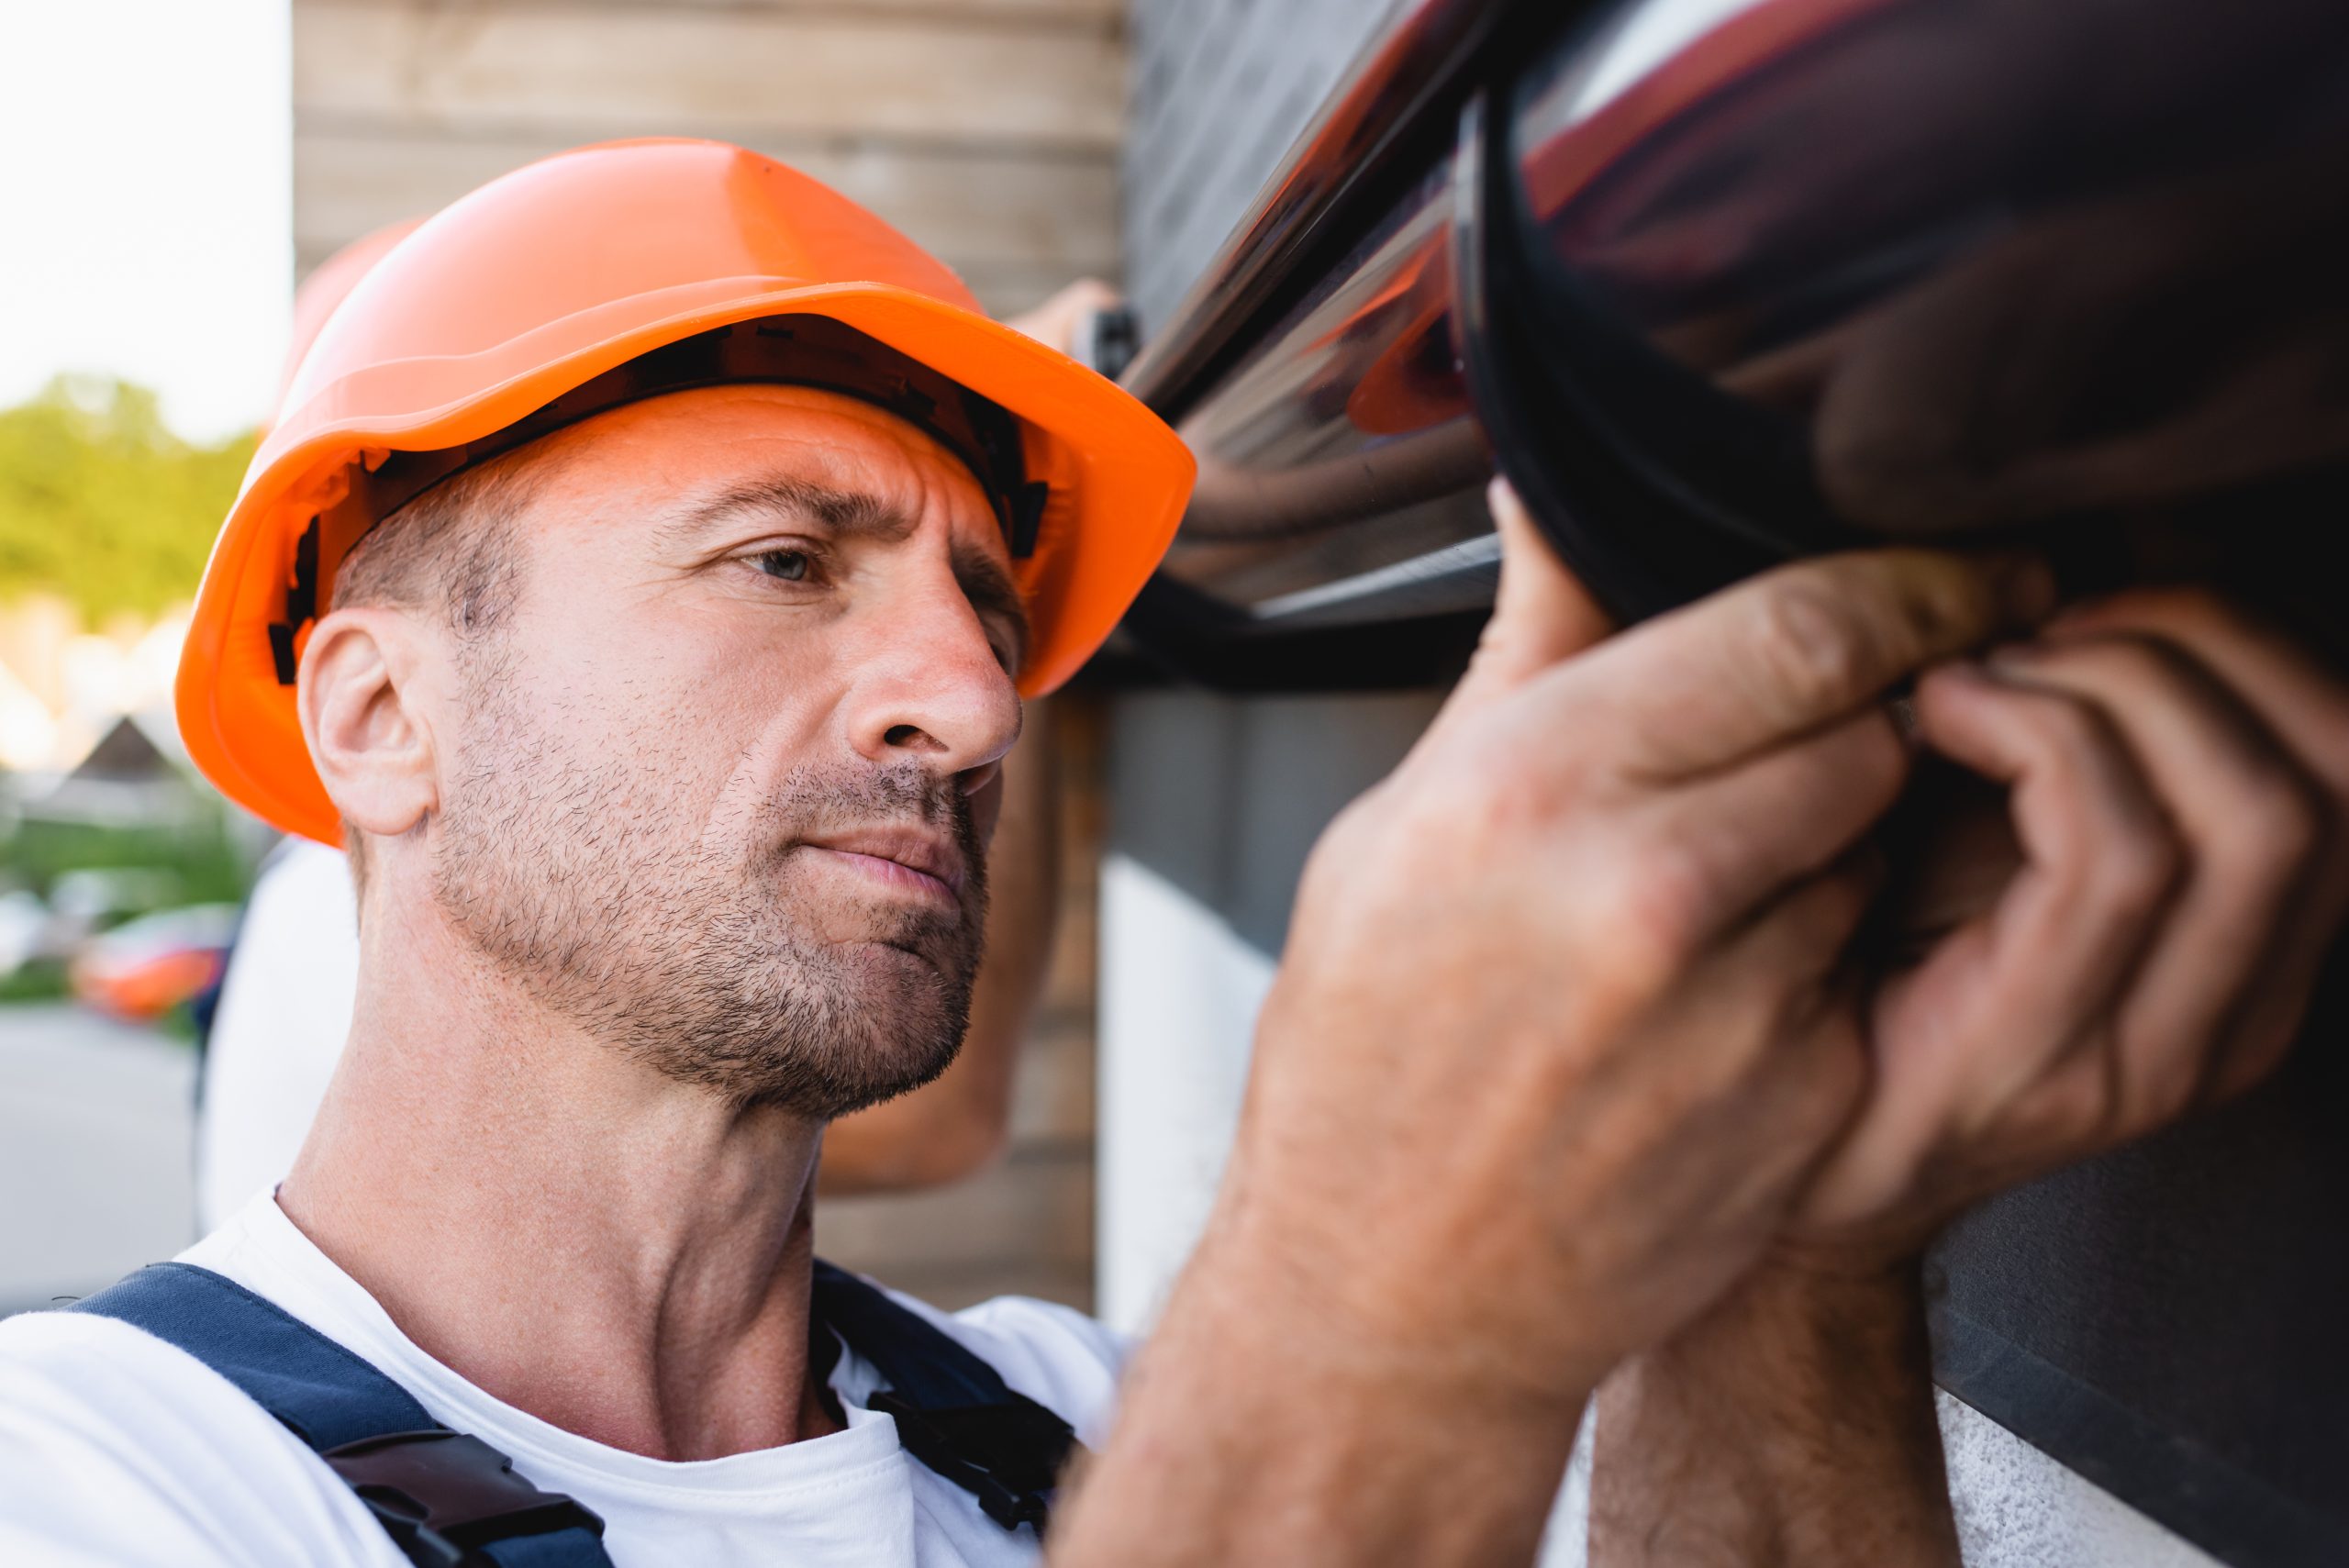 Man with an orange helmet installing gutters